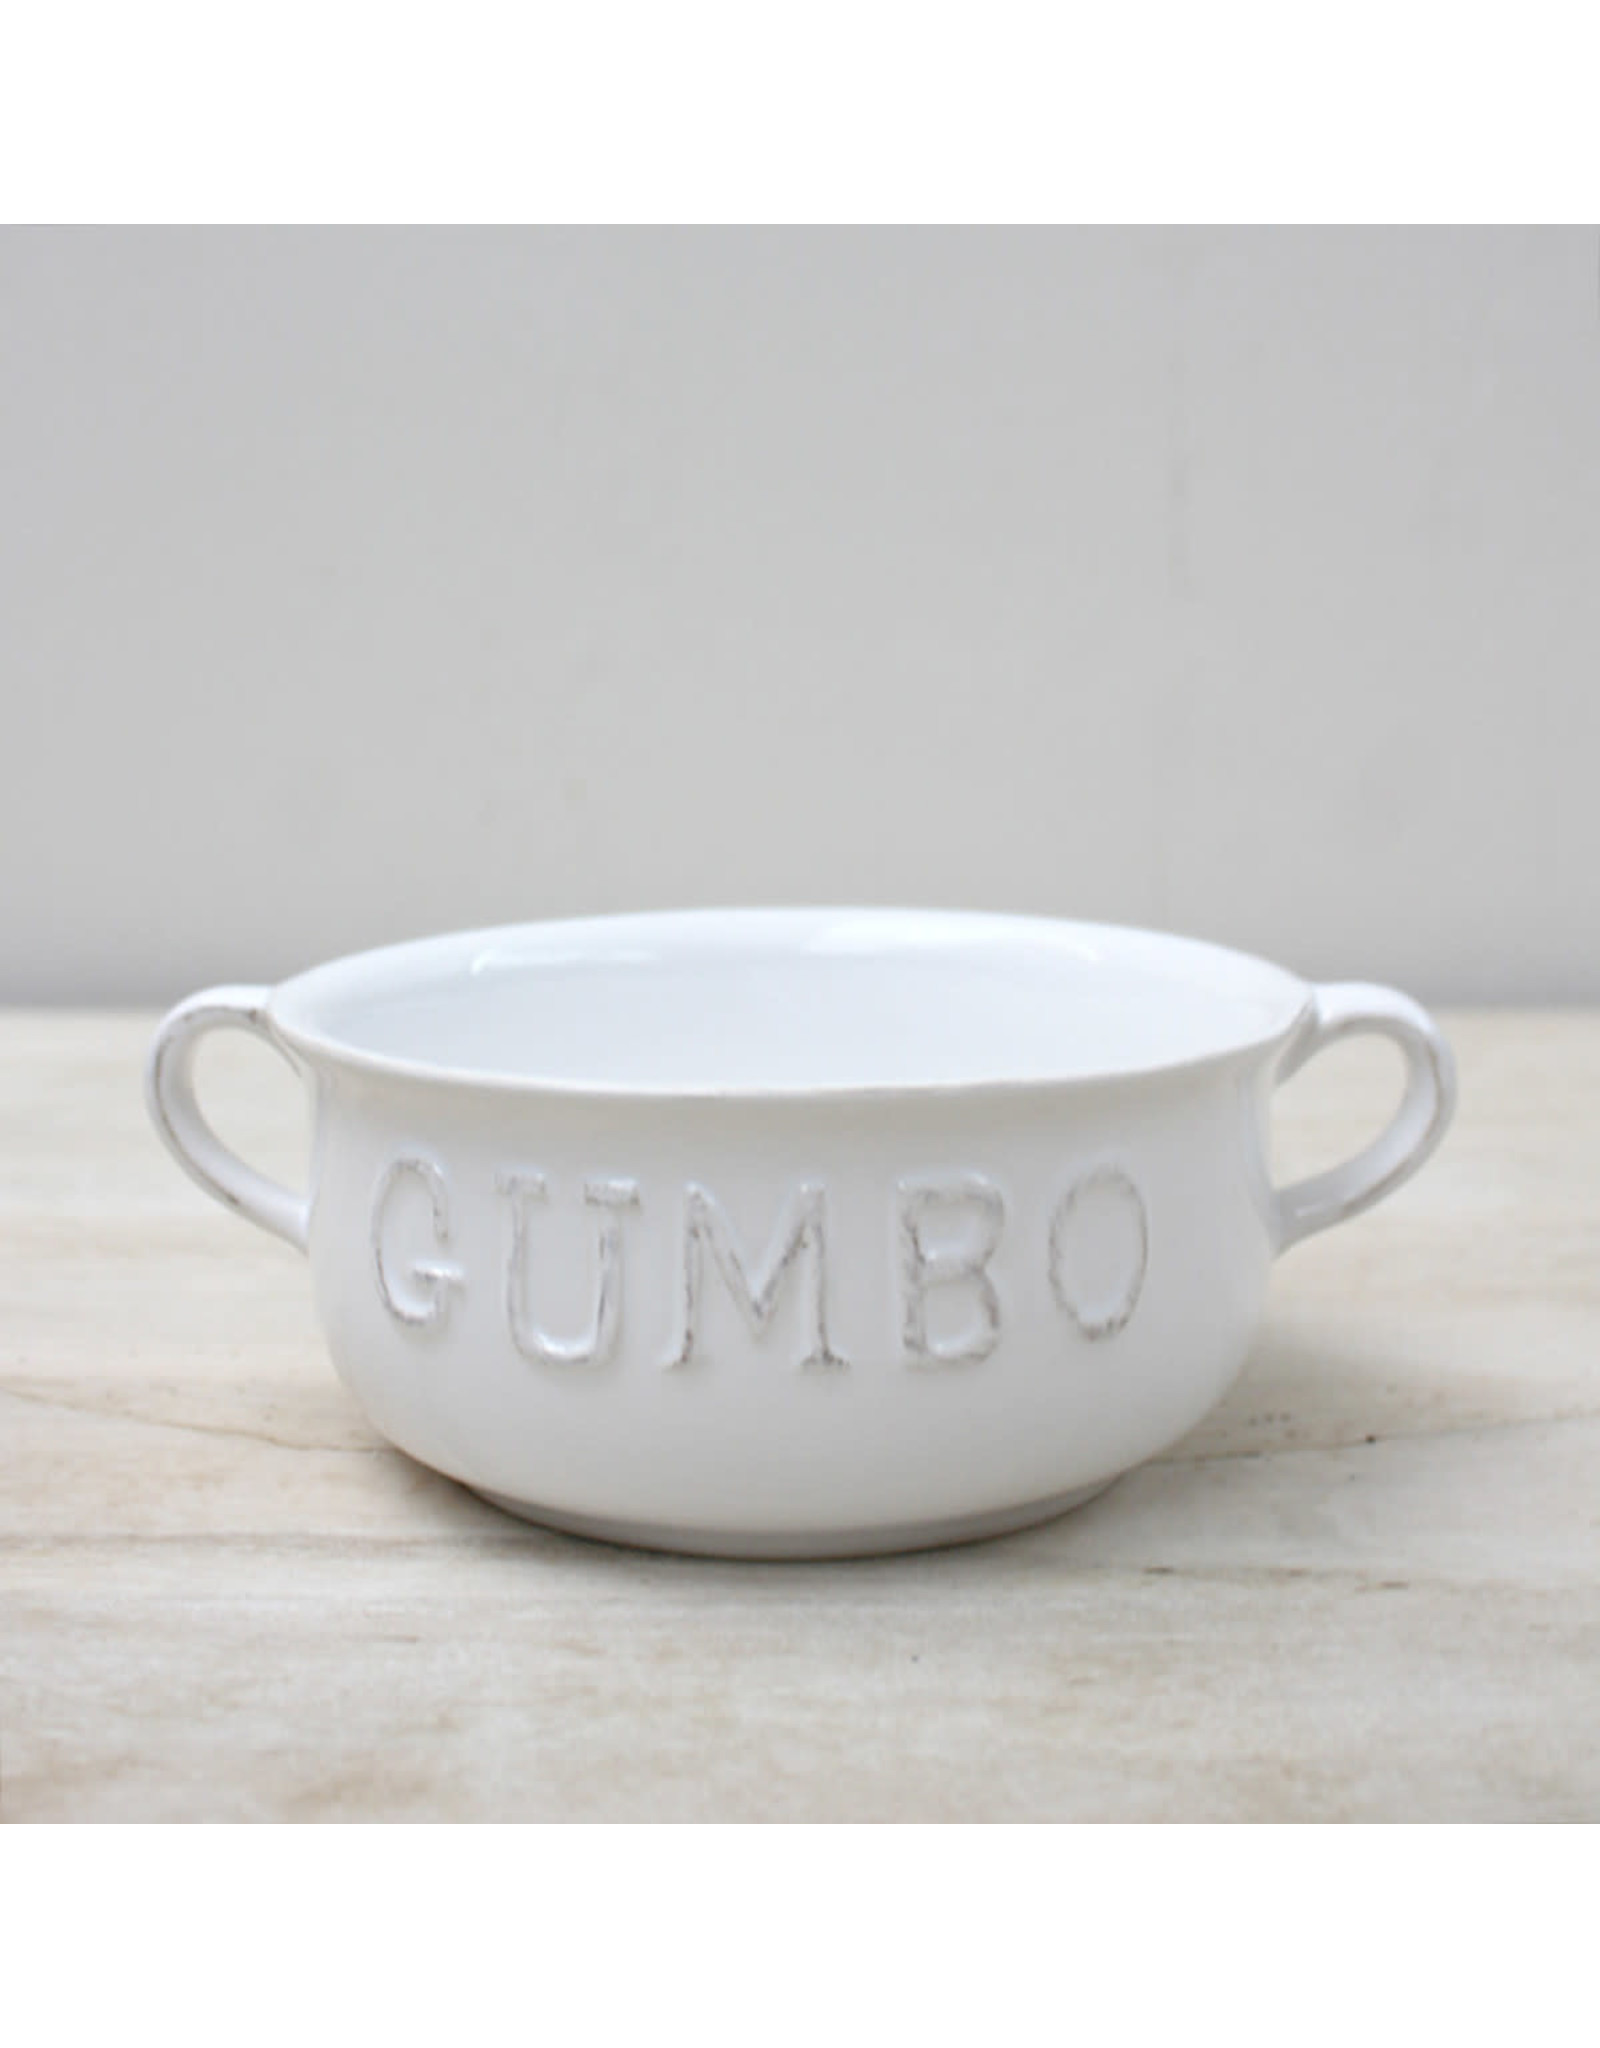 The Royal Standard Gumbo Double Handle Bowl